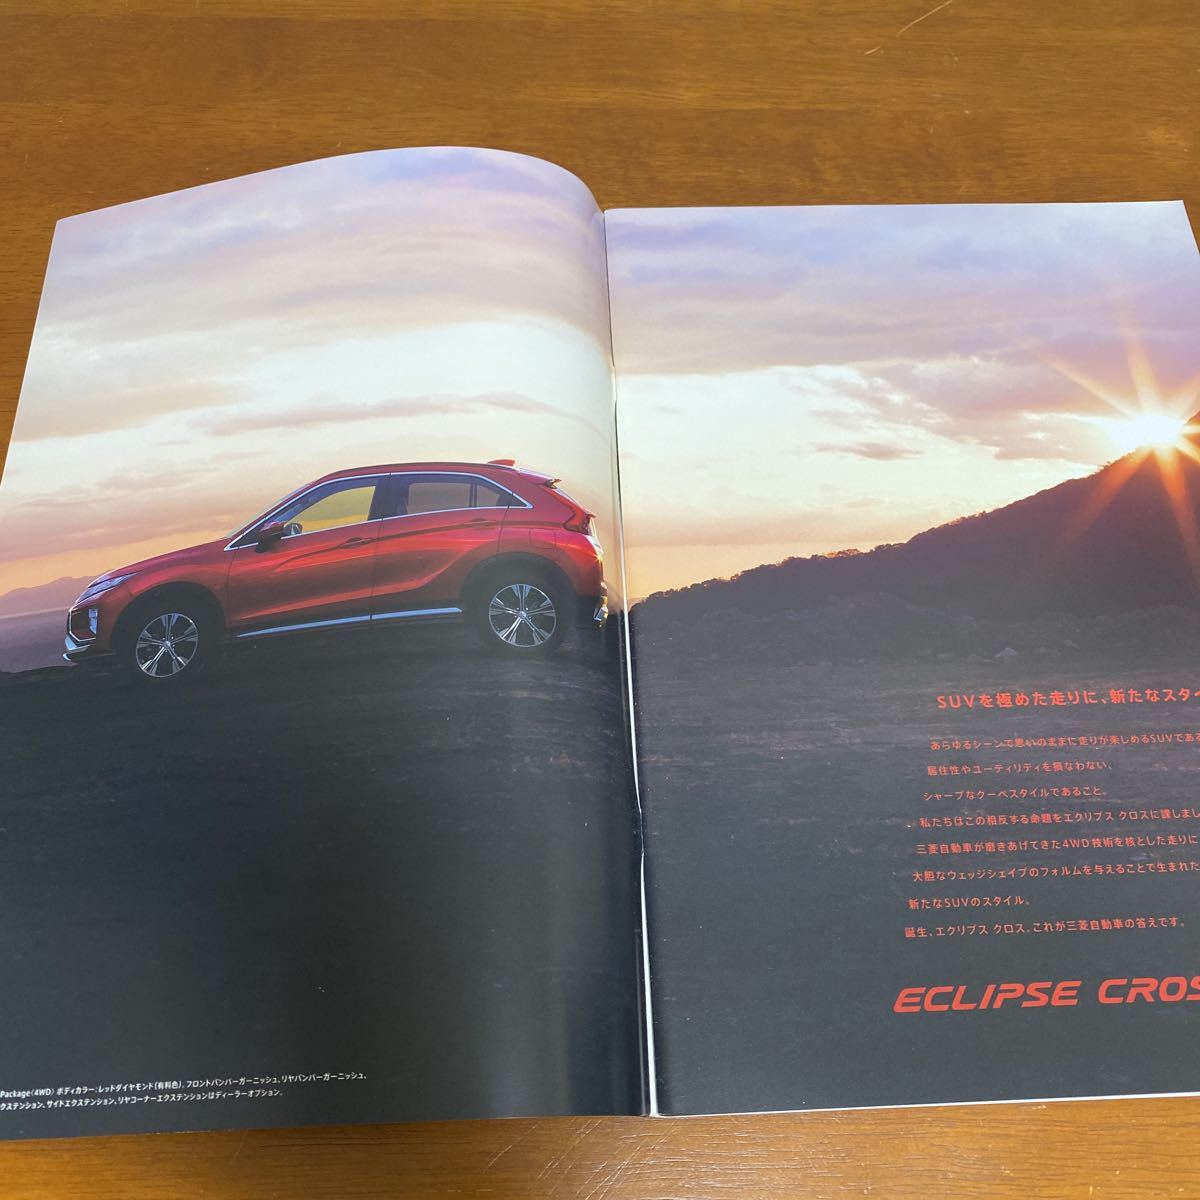  Mitsubishi Eclipse Cross каталог комплект (2018)